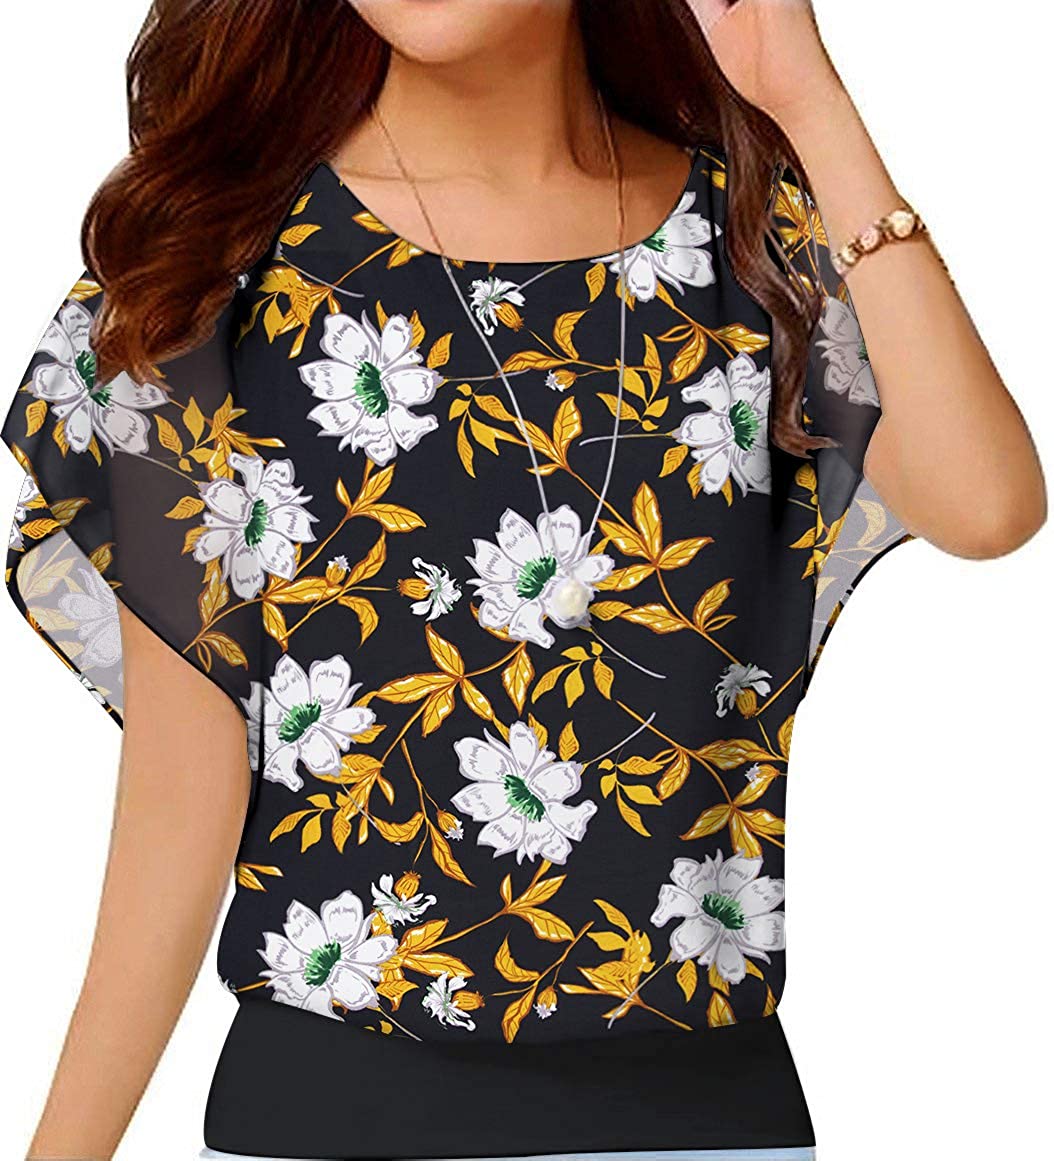 Wholesale Women's Sweatshirts Crewneck Long Sleeve Shirts Tunic Top Printed Styles